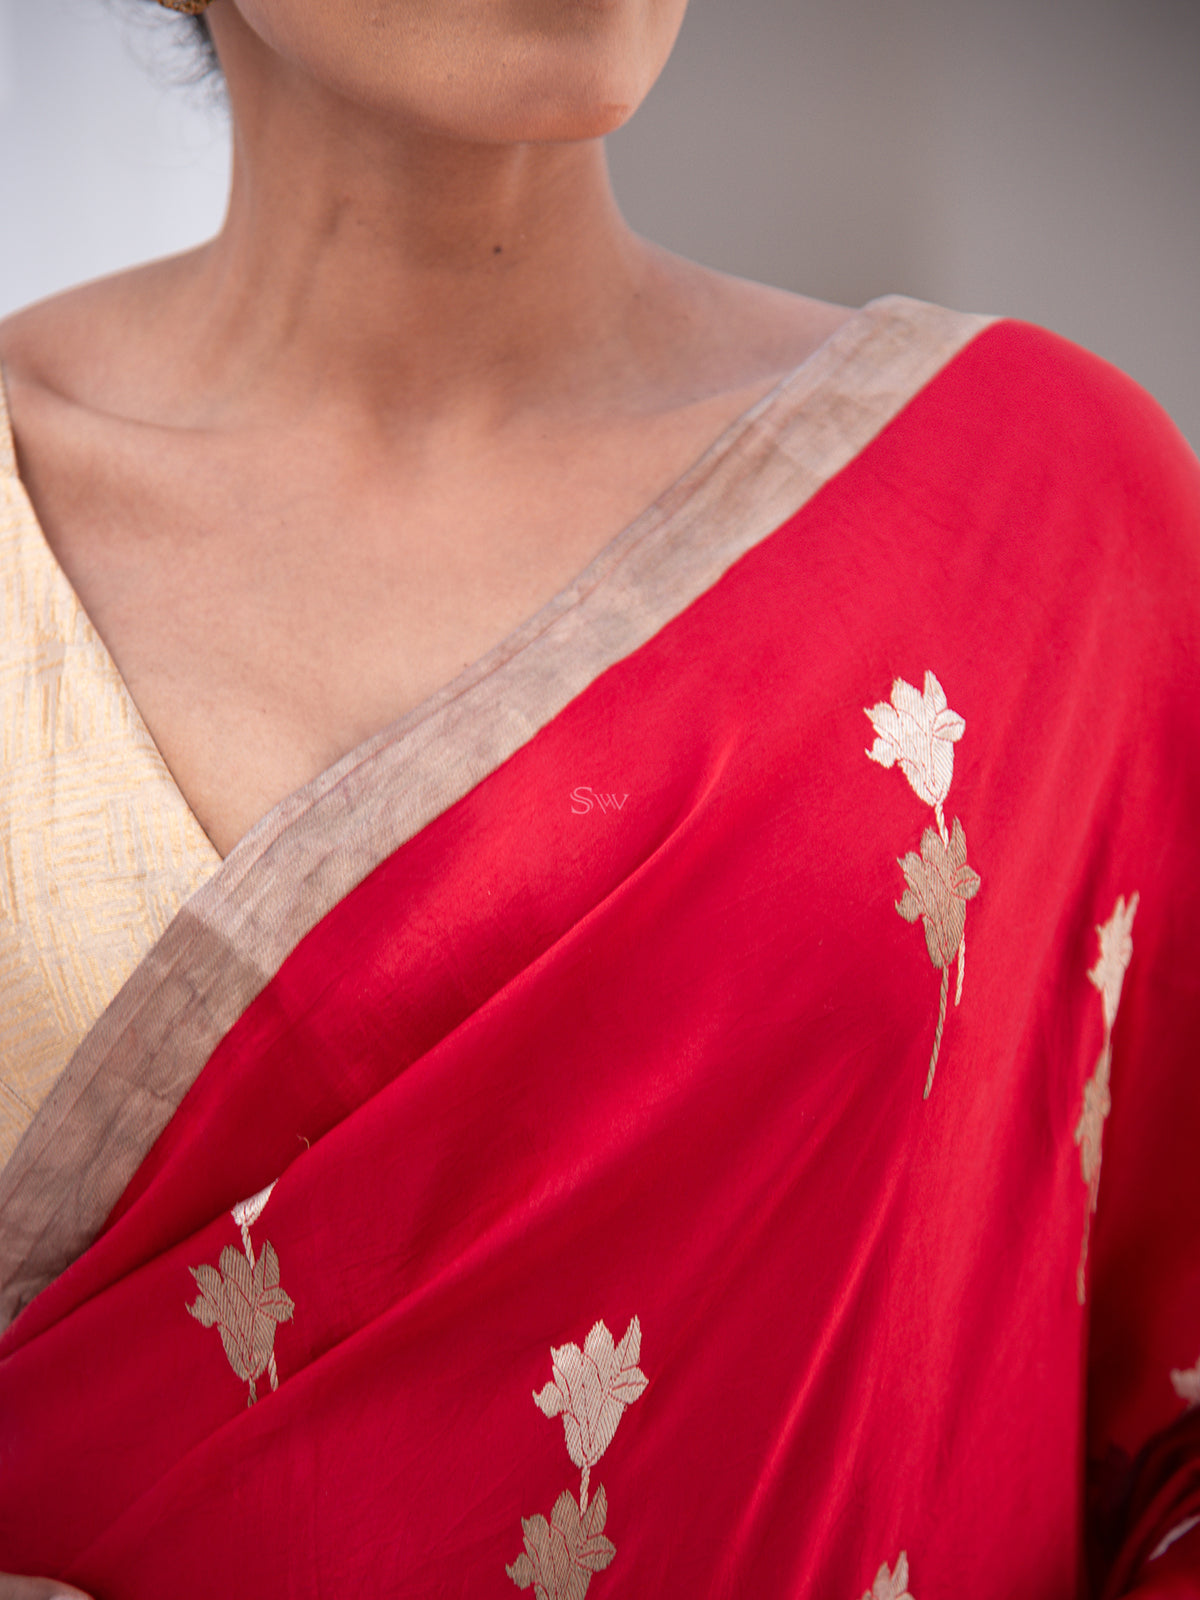 Red Mashru Satin Silk Handloom Banarasi Saree